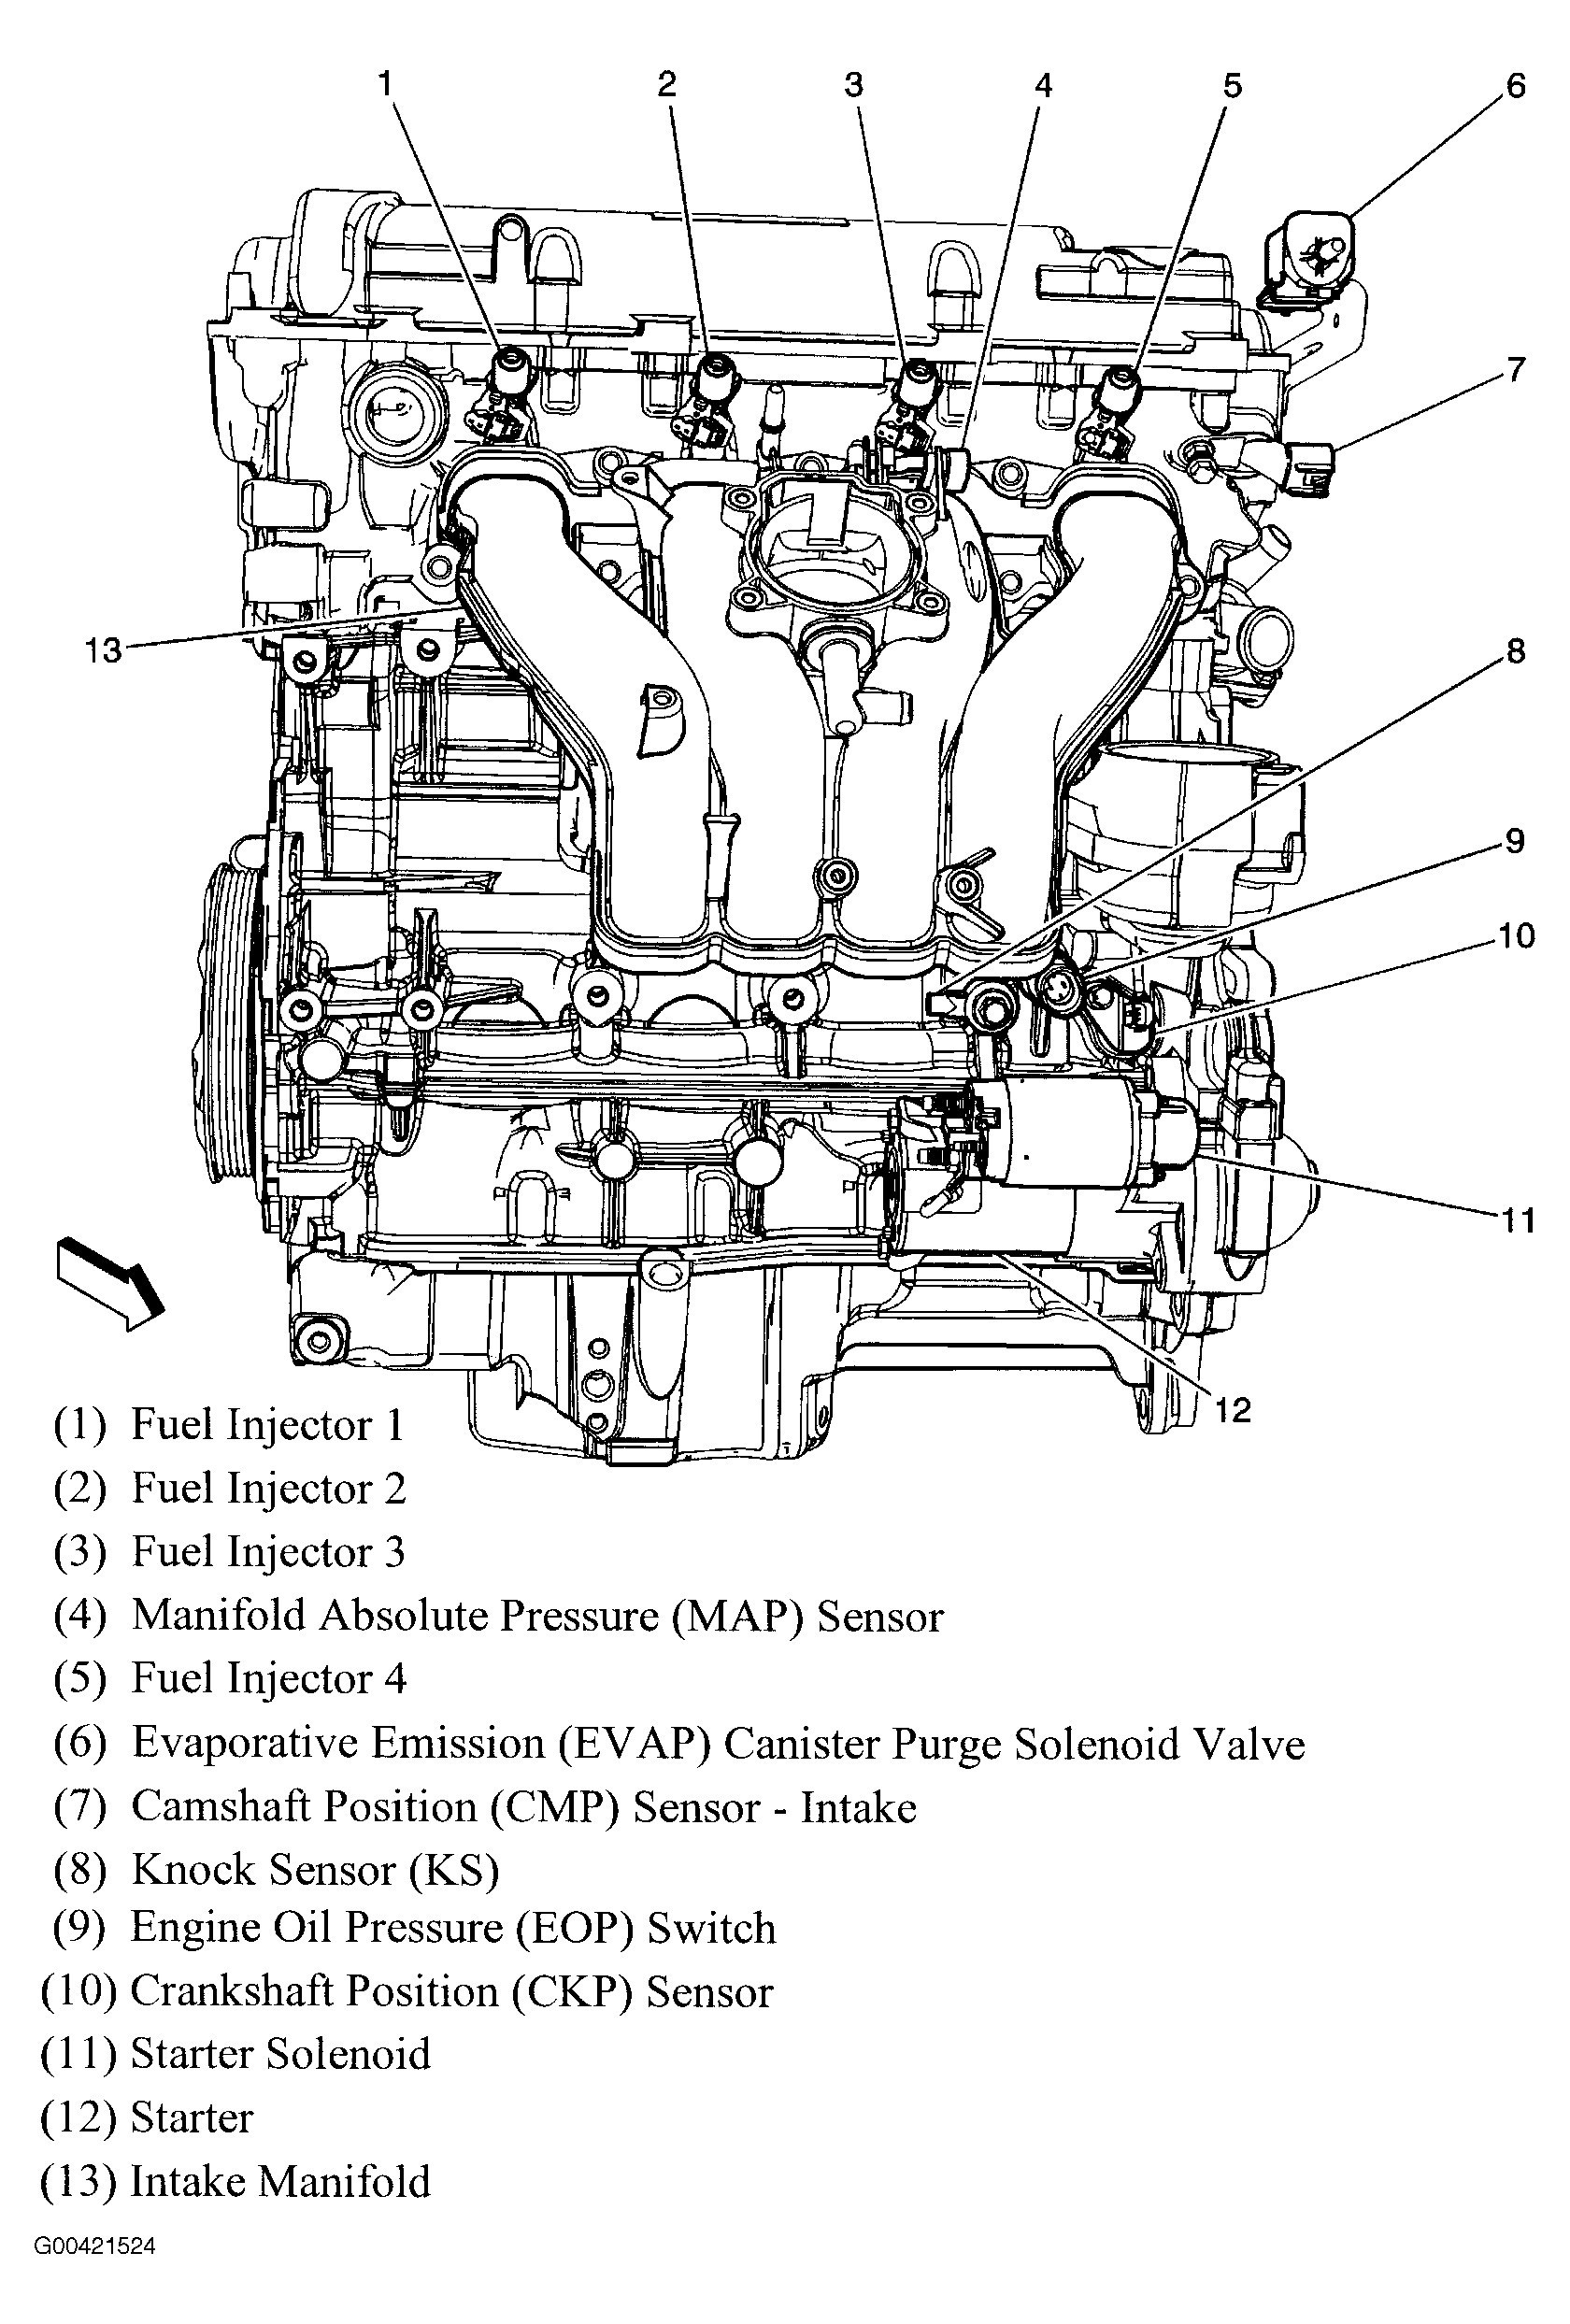 2004 Chevrolet Cavalier 2.2 Engine Schematic Grafik Chevy Aveo Vacuum Diagram Full Quality Bladehealth Of 2004 Chevrolet Cavalier 2.2 Engine Schematic